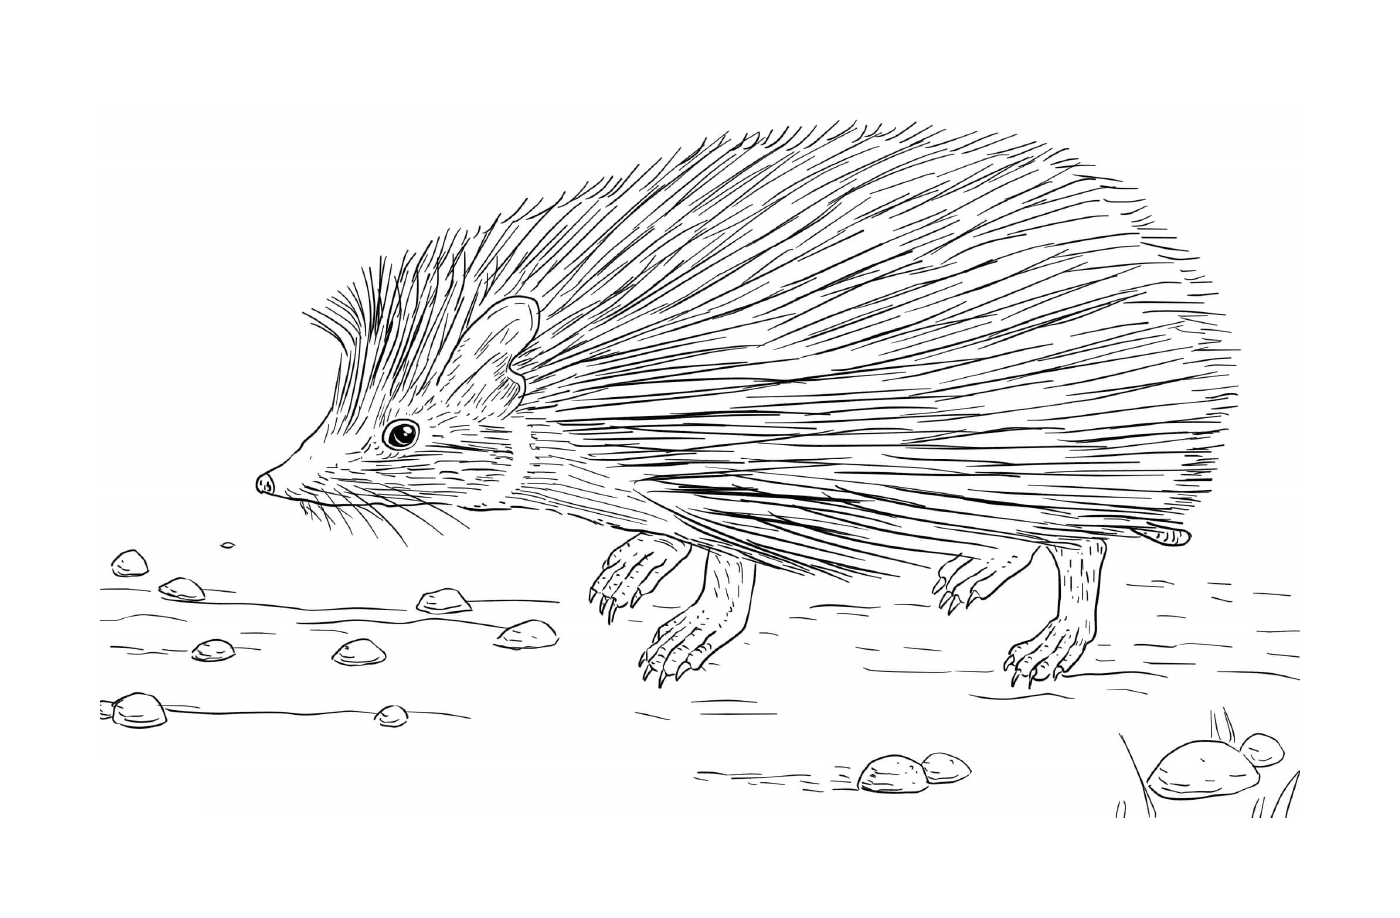  Hedgehog in nature 